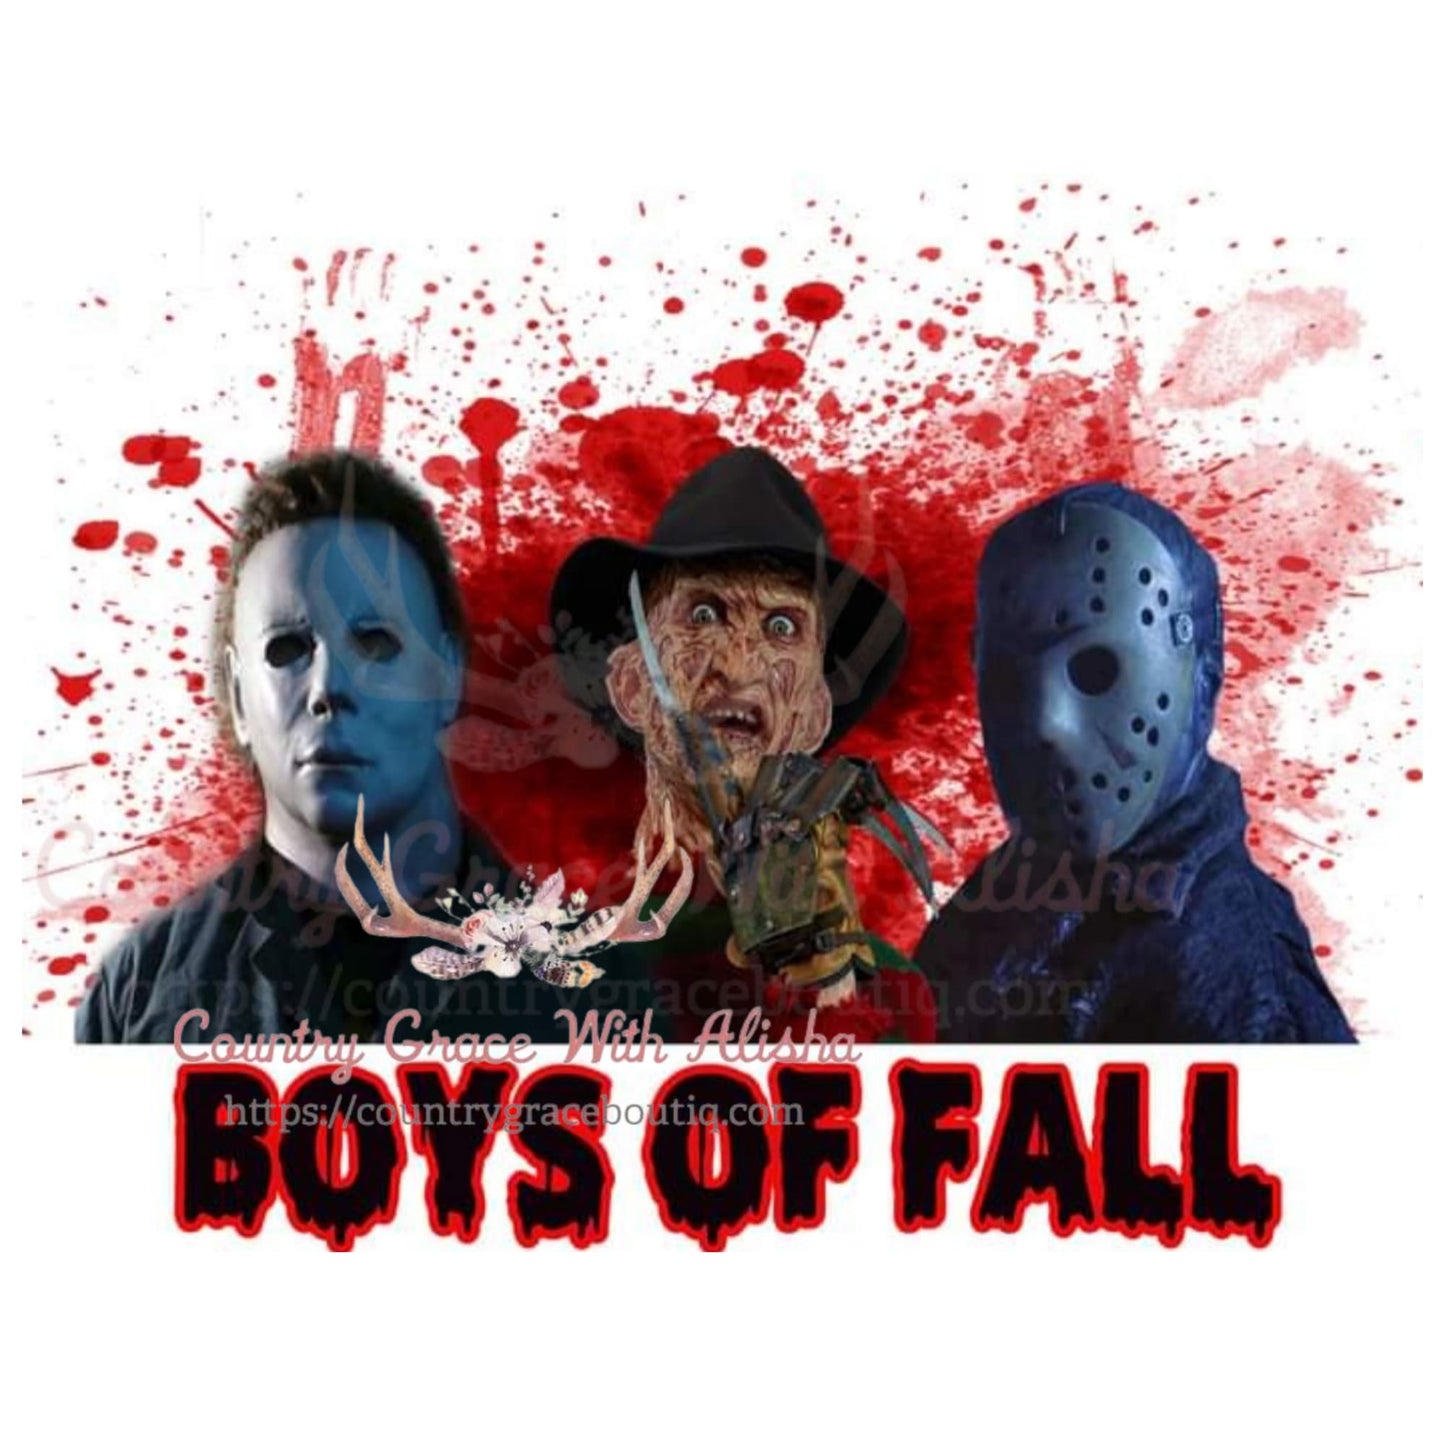 Boys of Fall Halloween Sublimation Transfer - Sub $1.50 